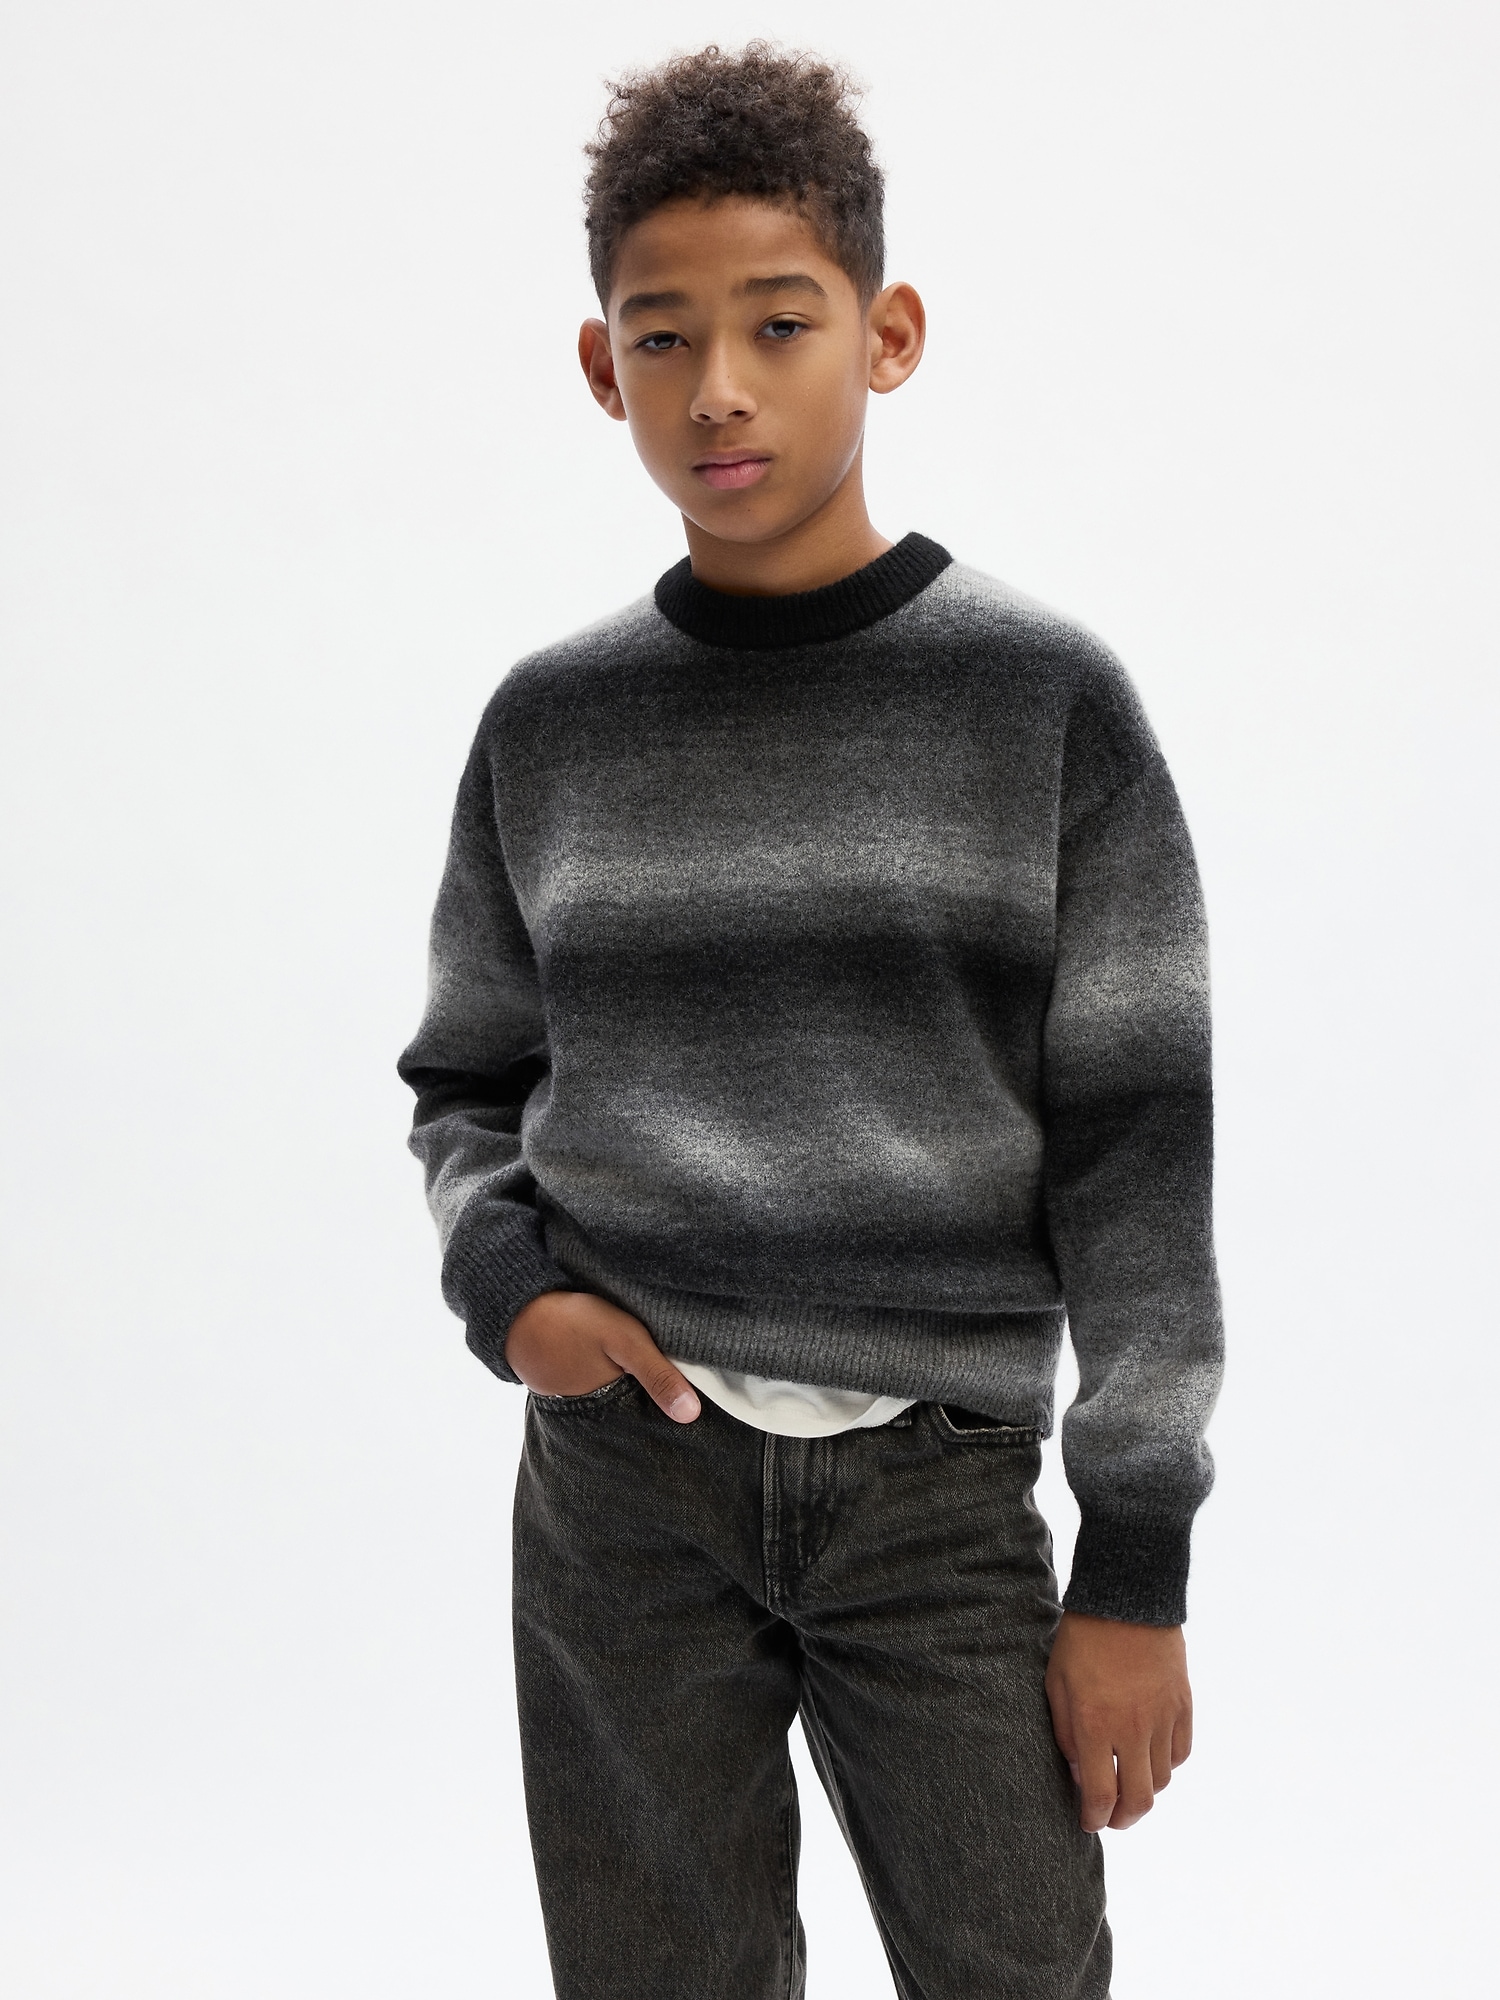 Kids Pullovers | Gap